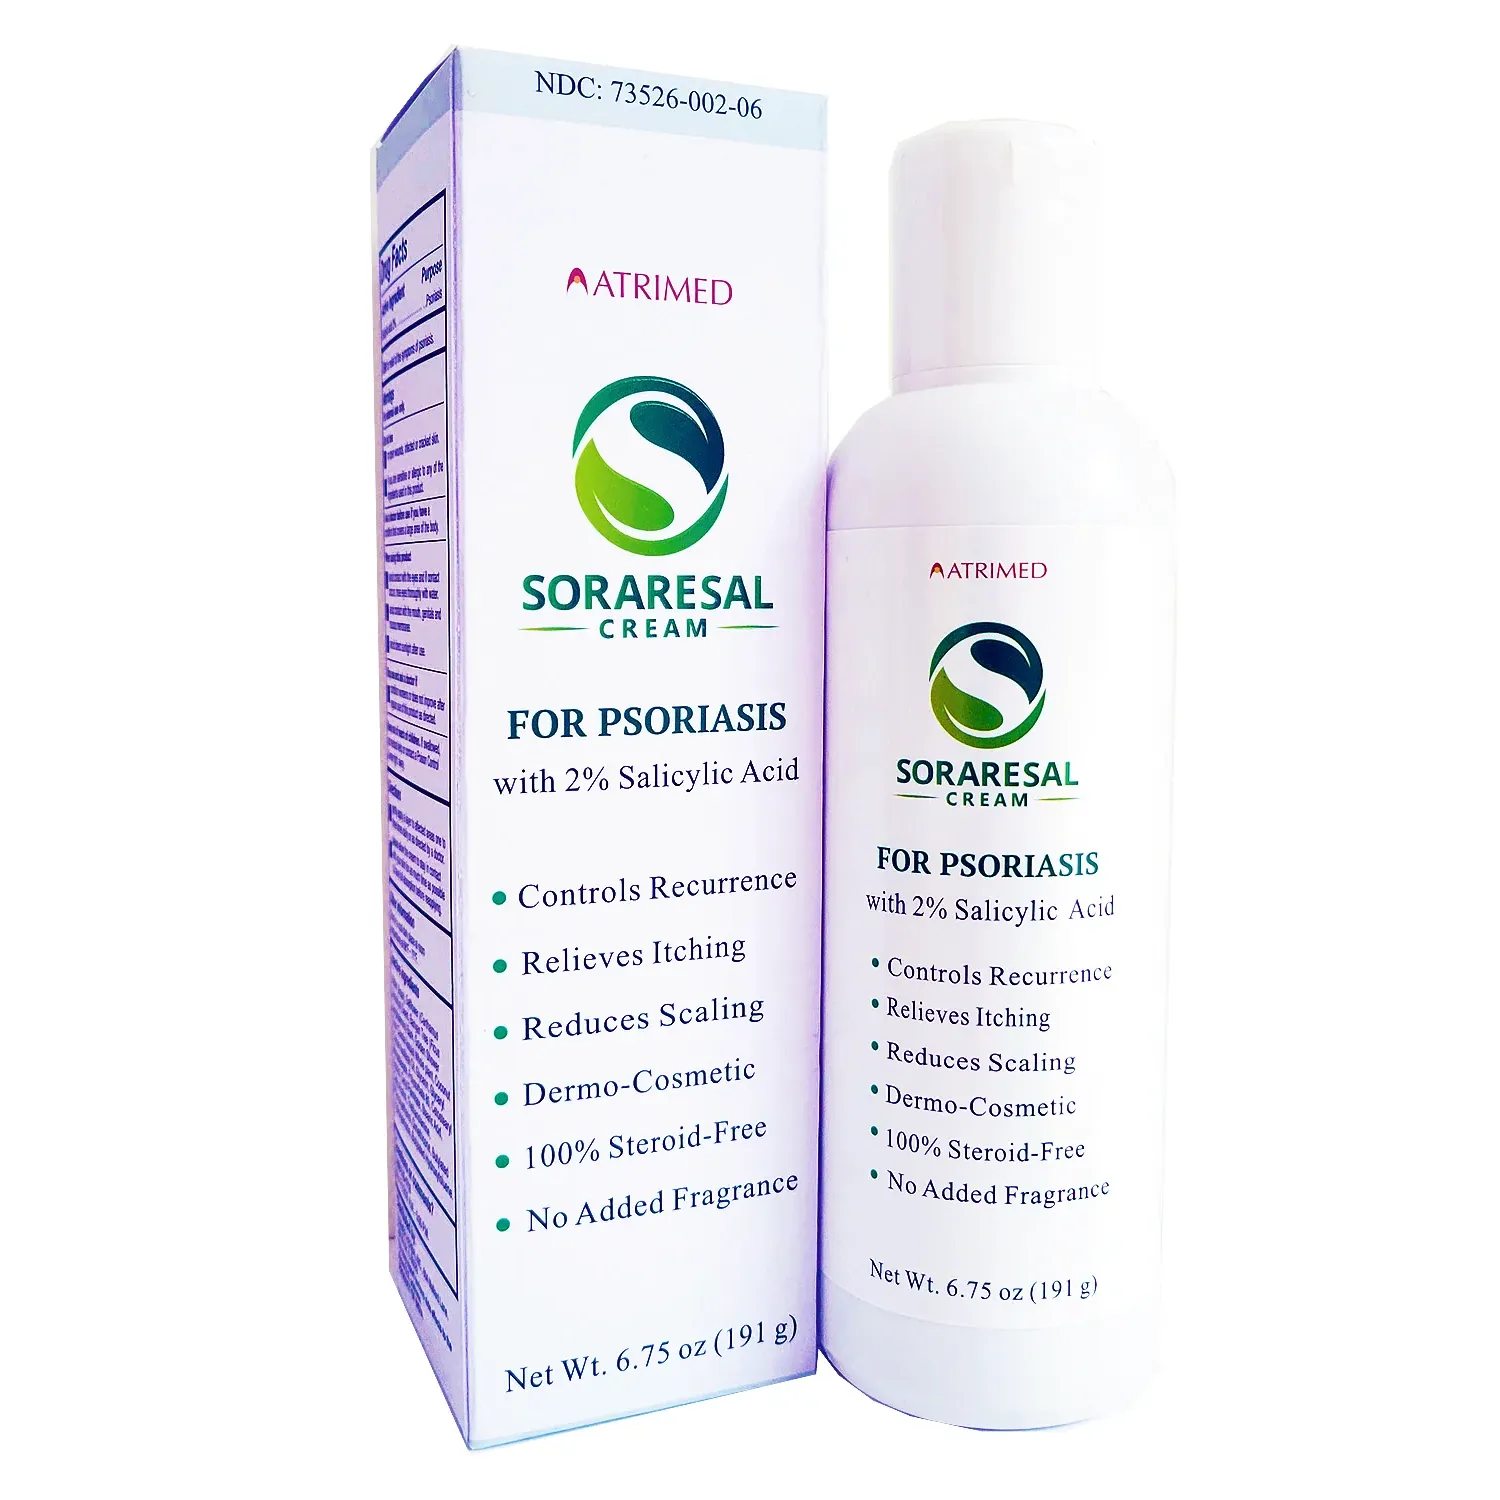 Free Soraresal Cream For Psoriasis Treatment